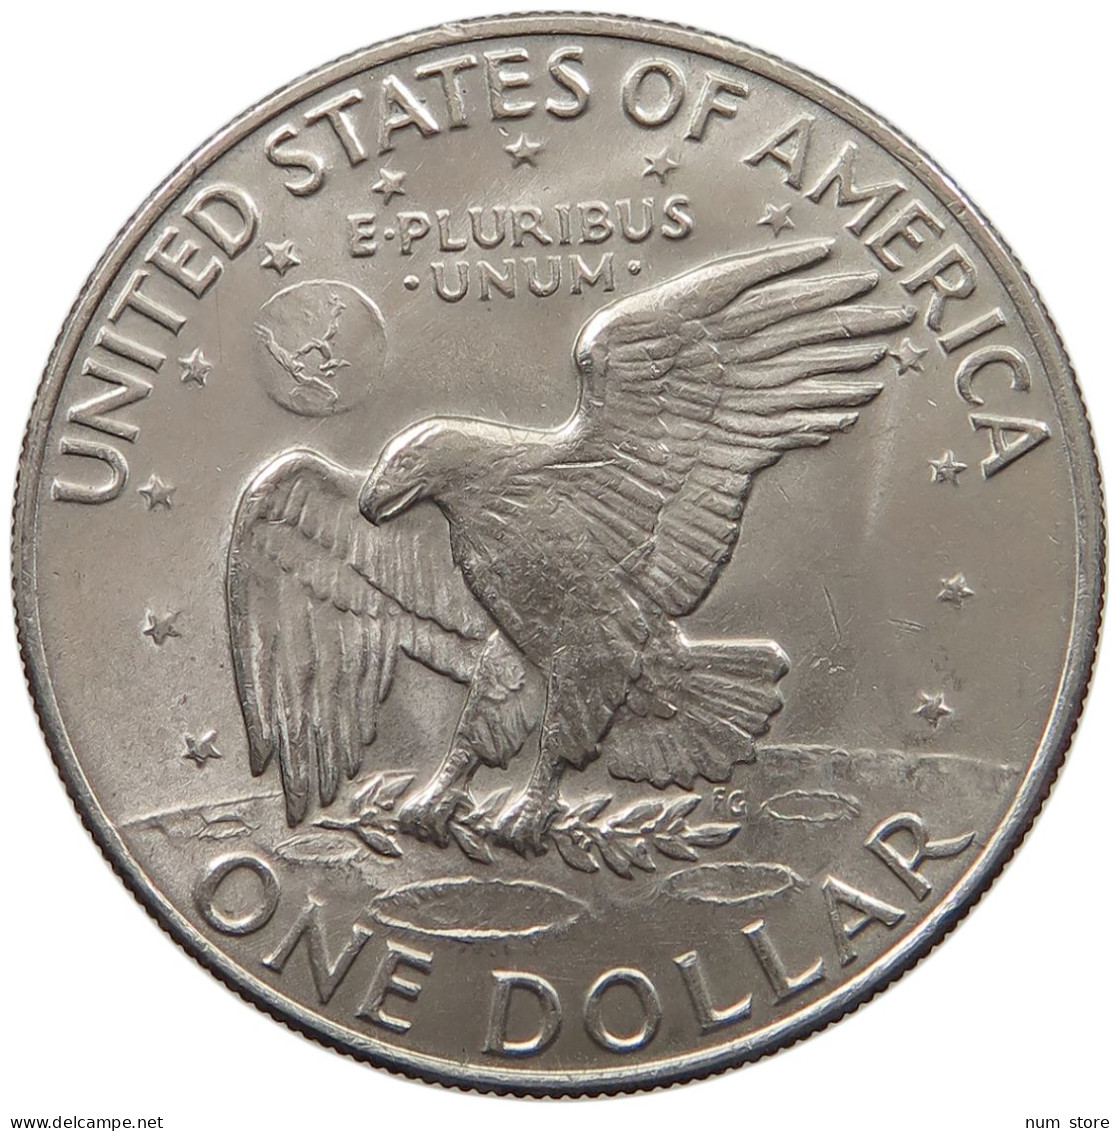 UNITED STATES OF AMERICA DOLLAR 1974 D EISENHOWER #c035 0151 - 1971-1978: Eisenhower